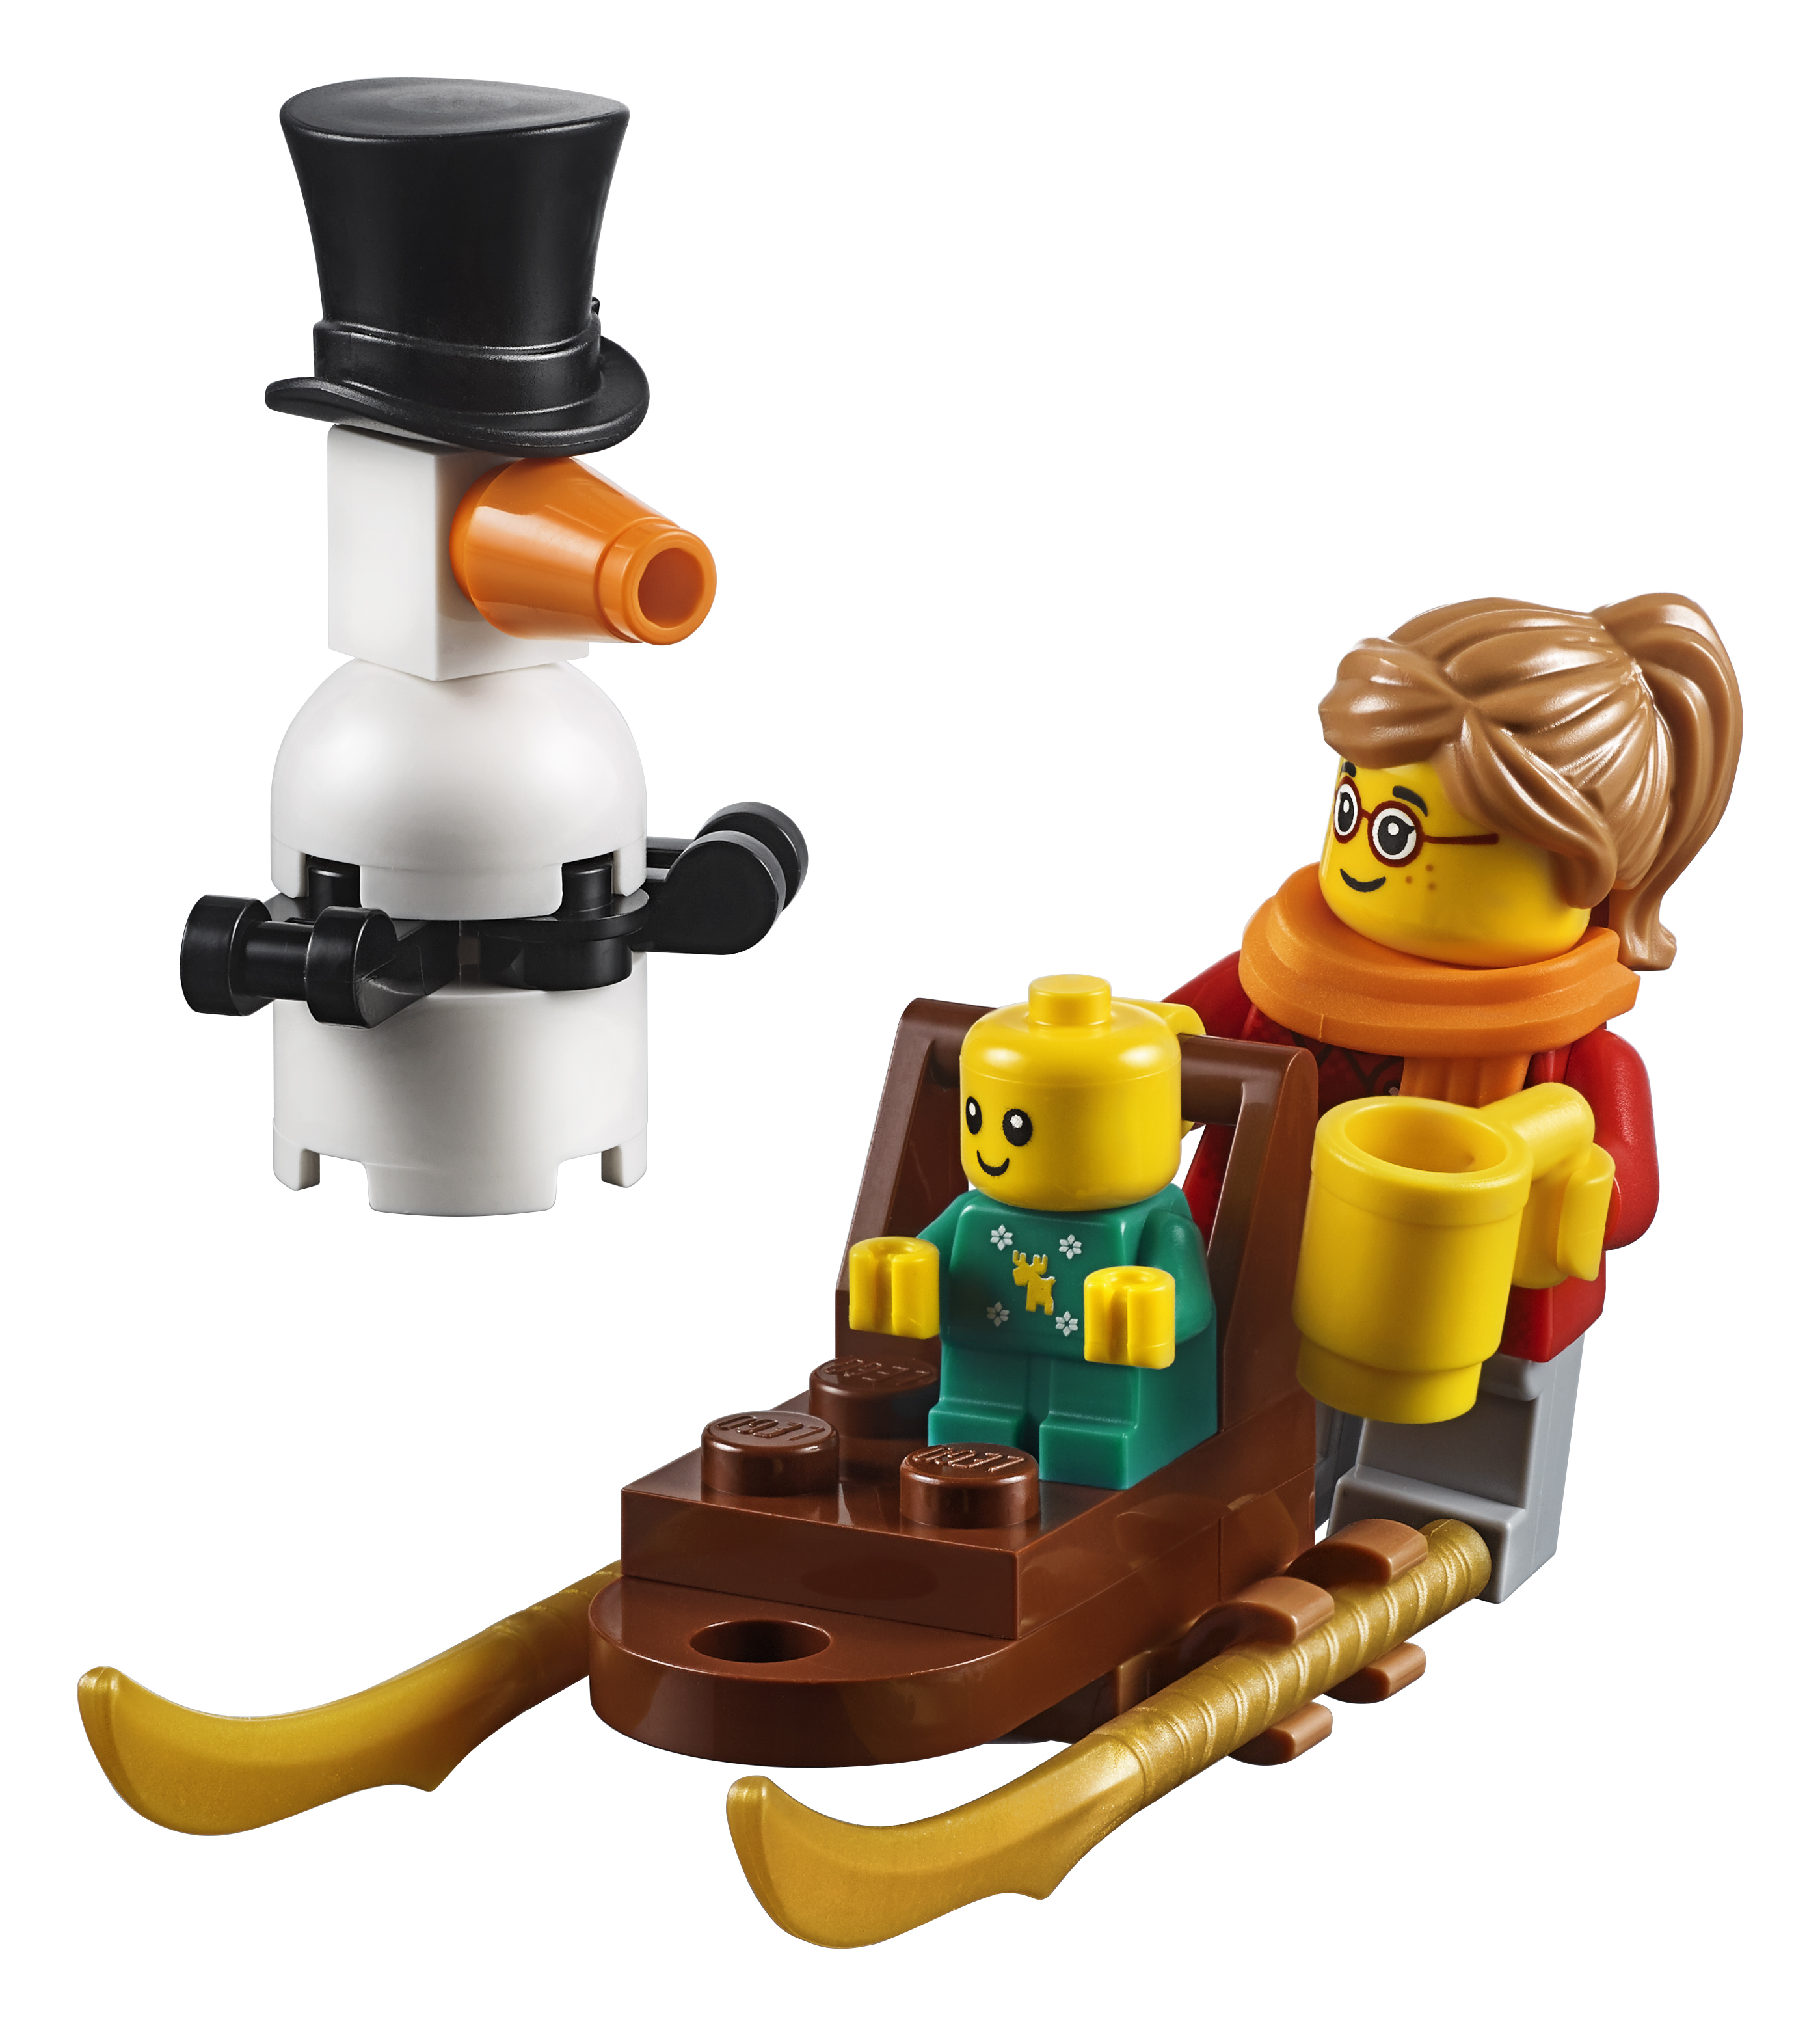 LEGO 10263 Creator Expert Winter Fire Station